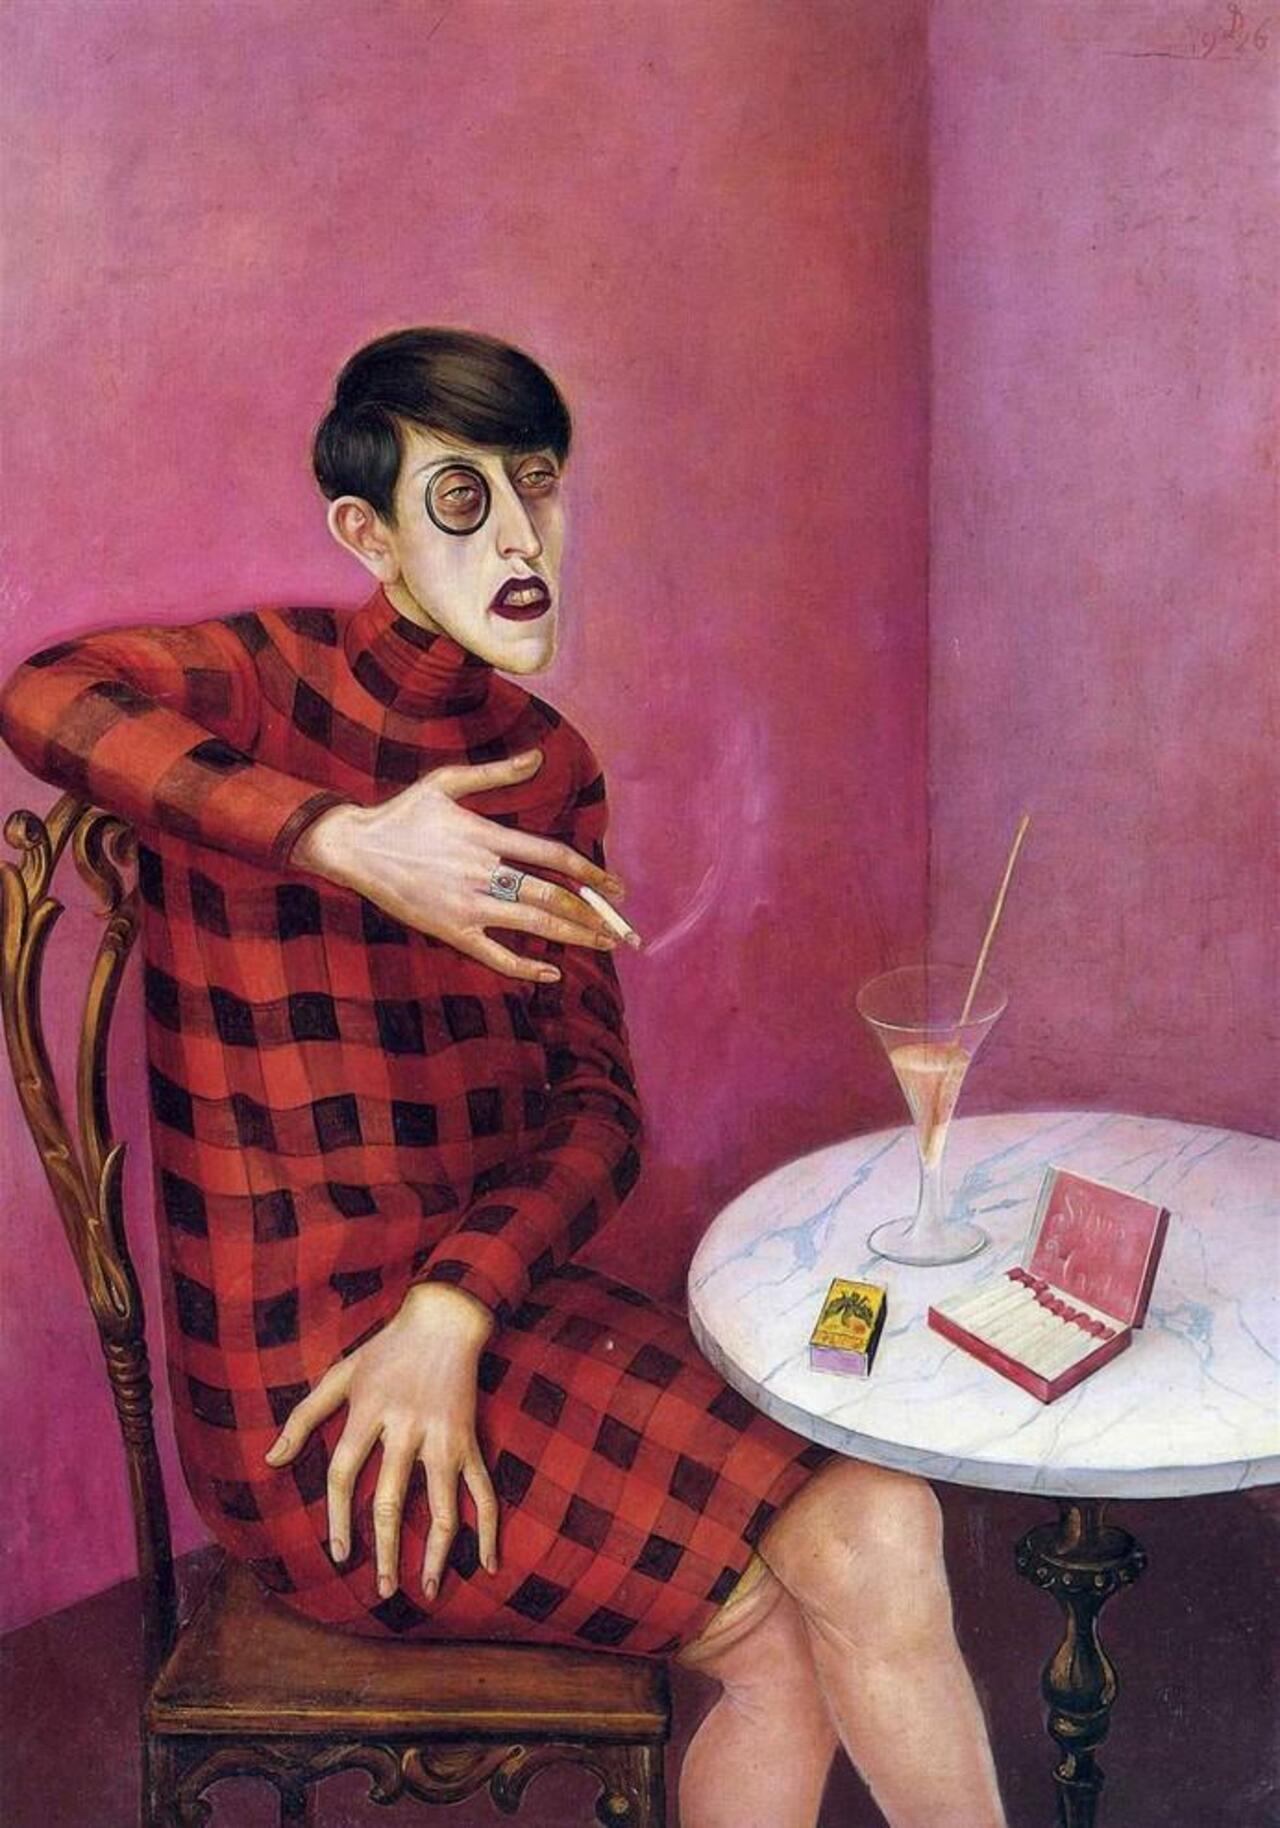 Otto Dix #Art #Paintings #German #Expressionism #Verism #Dada #Cubism http://t.co/kT62JKuYdd